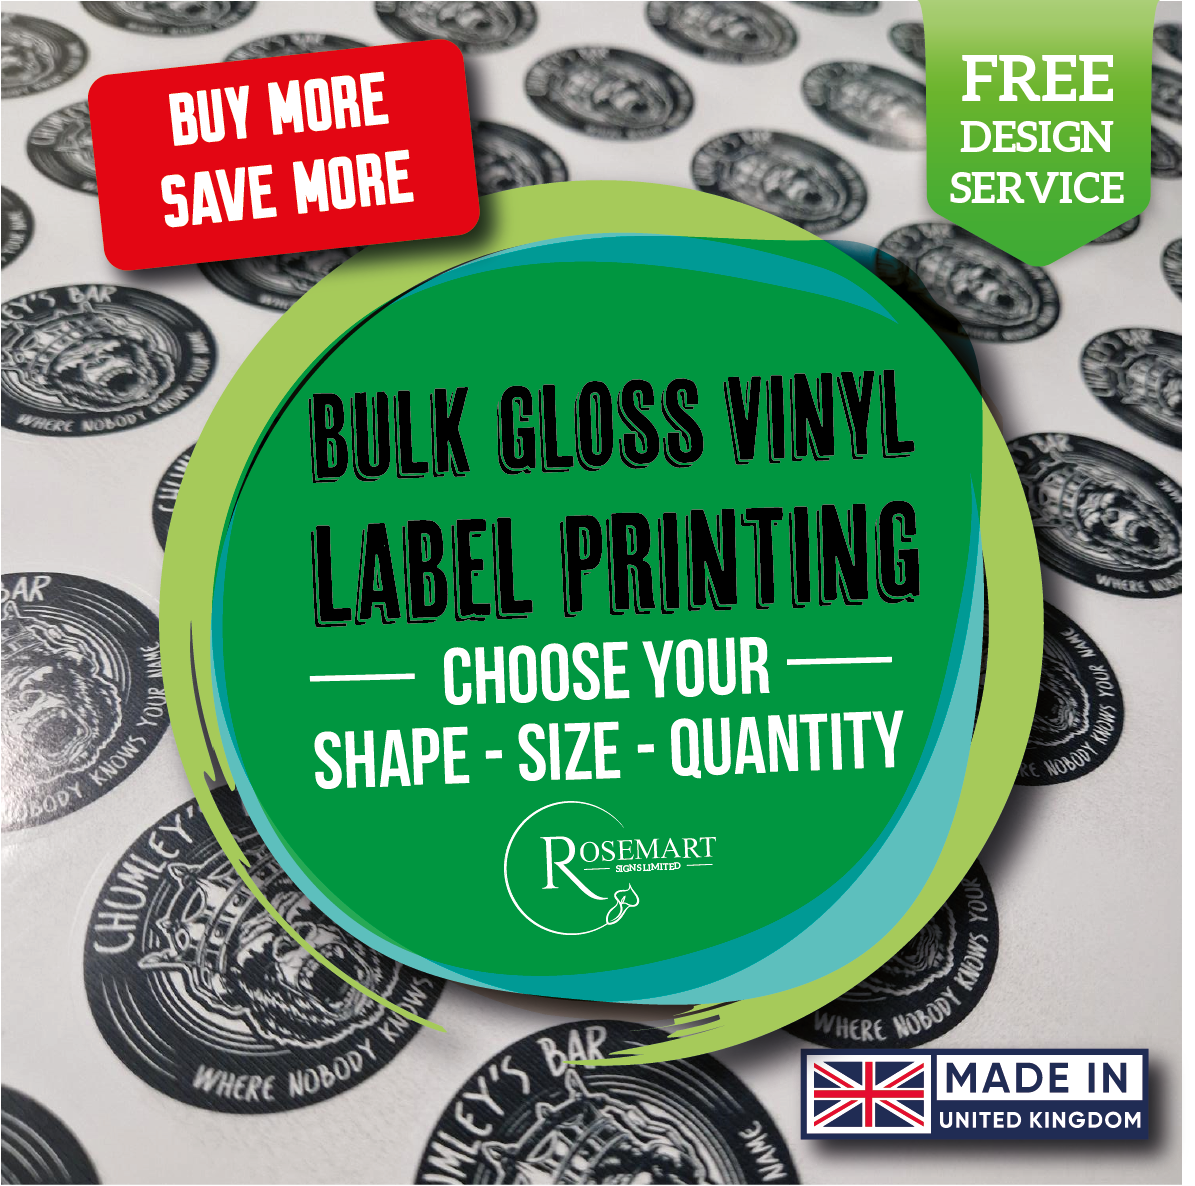 Custom Vinyl Stickers Printing Services